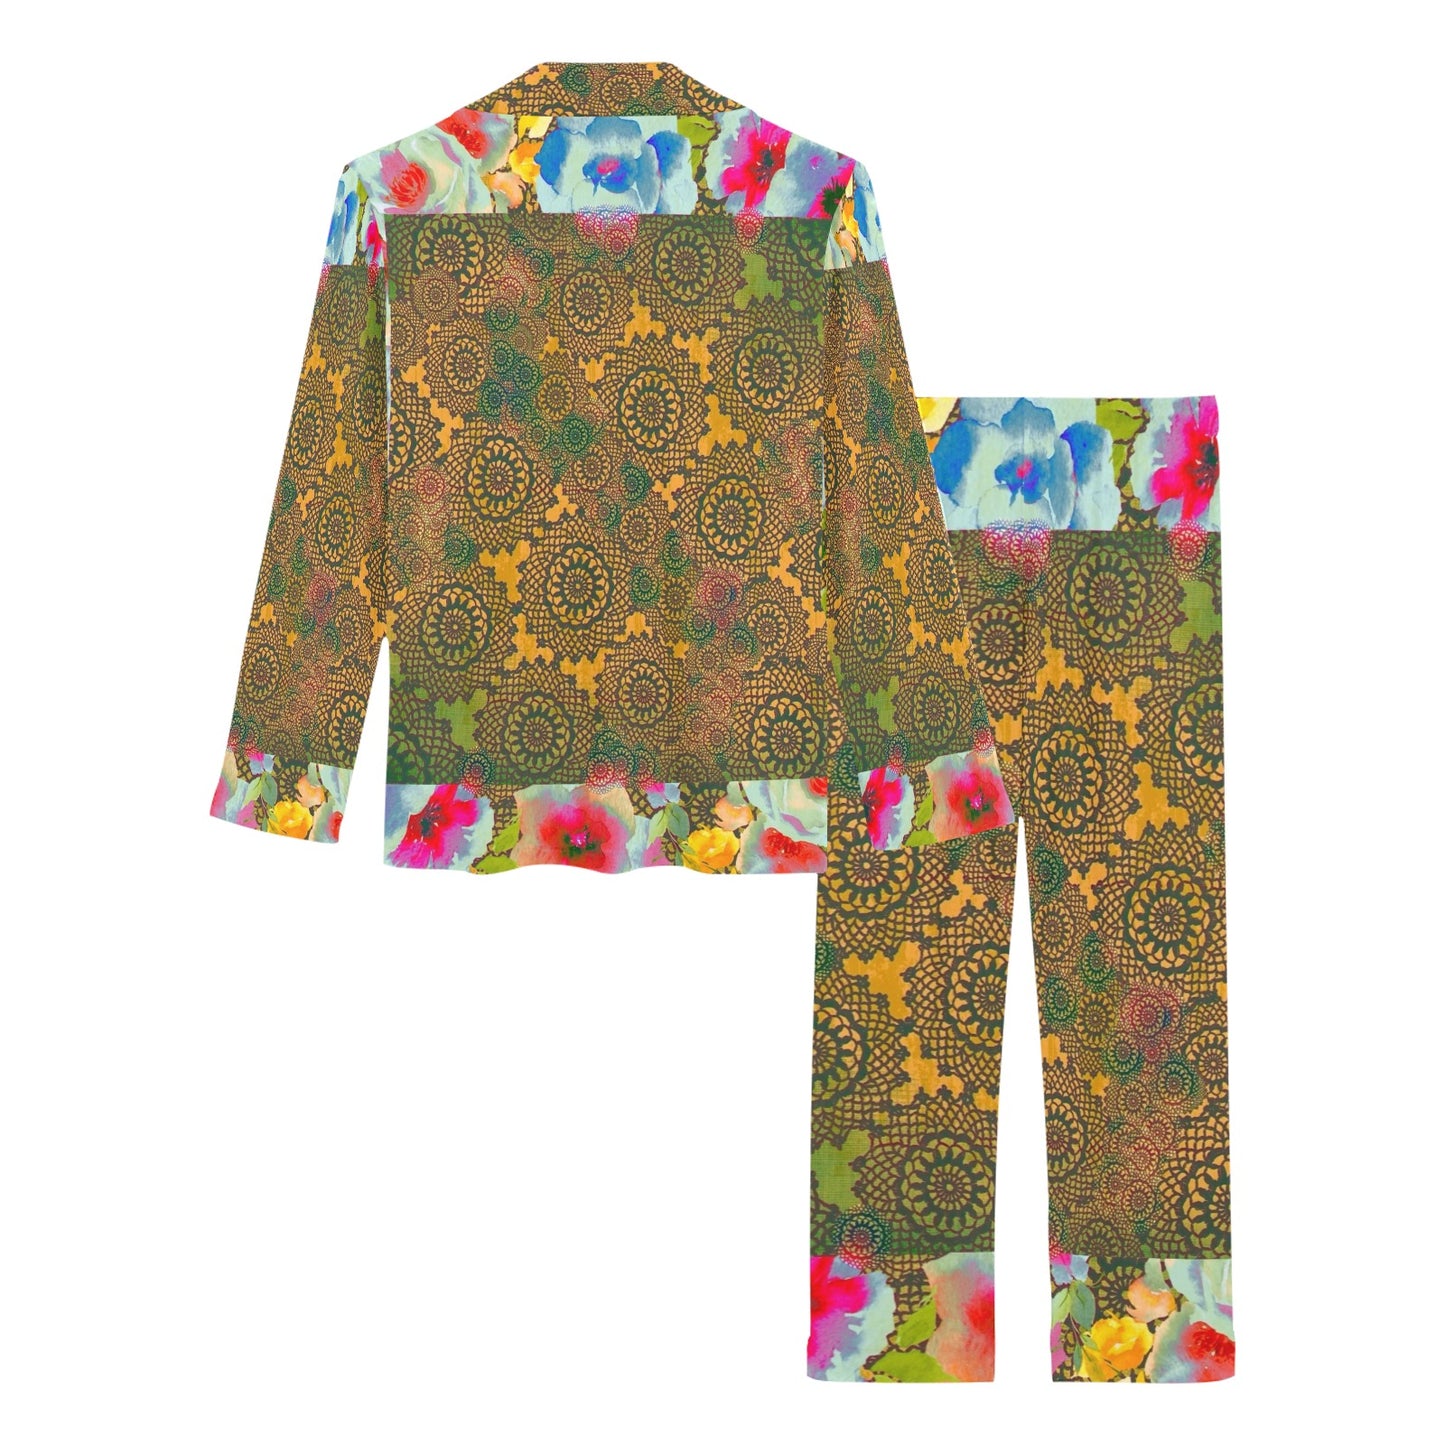 Victorian printed lace pajama set, design 15 Women's Long Pajama Set (Sets 02)